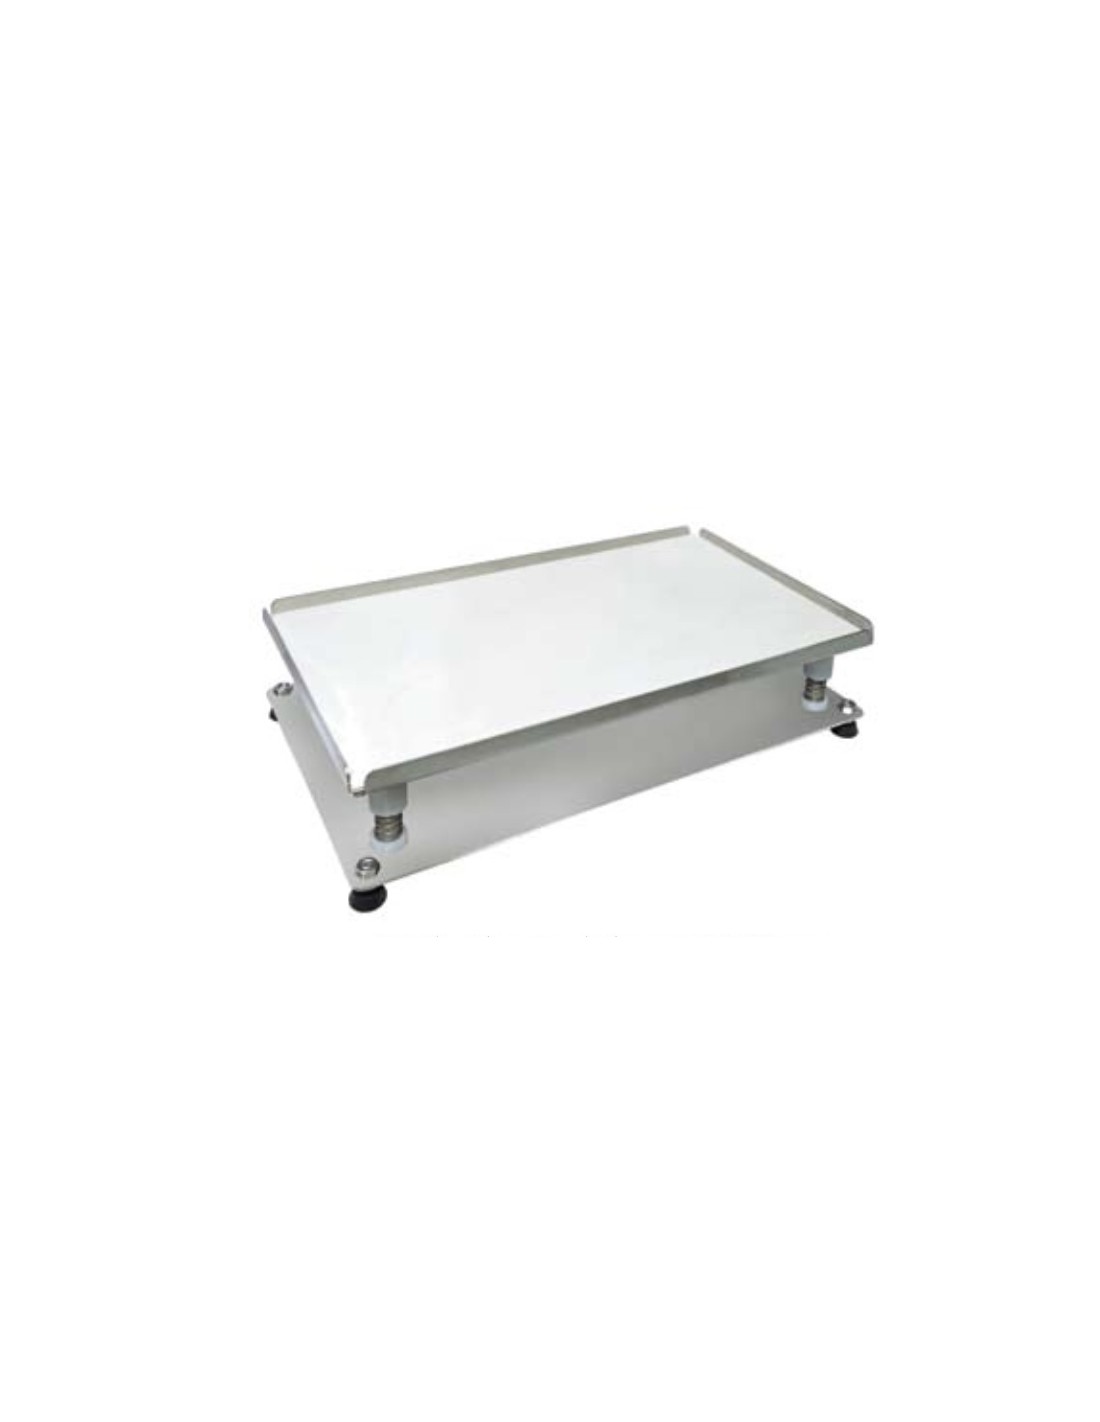 Bench vibrating table - Cm 54 x 32